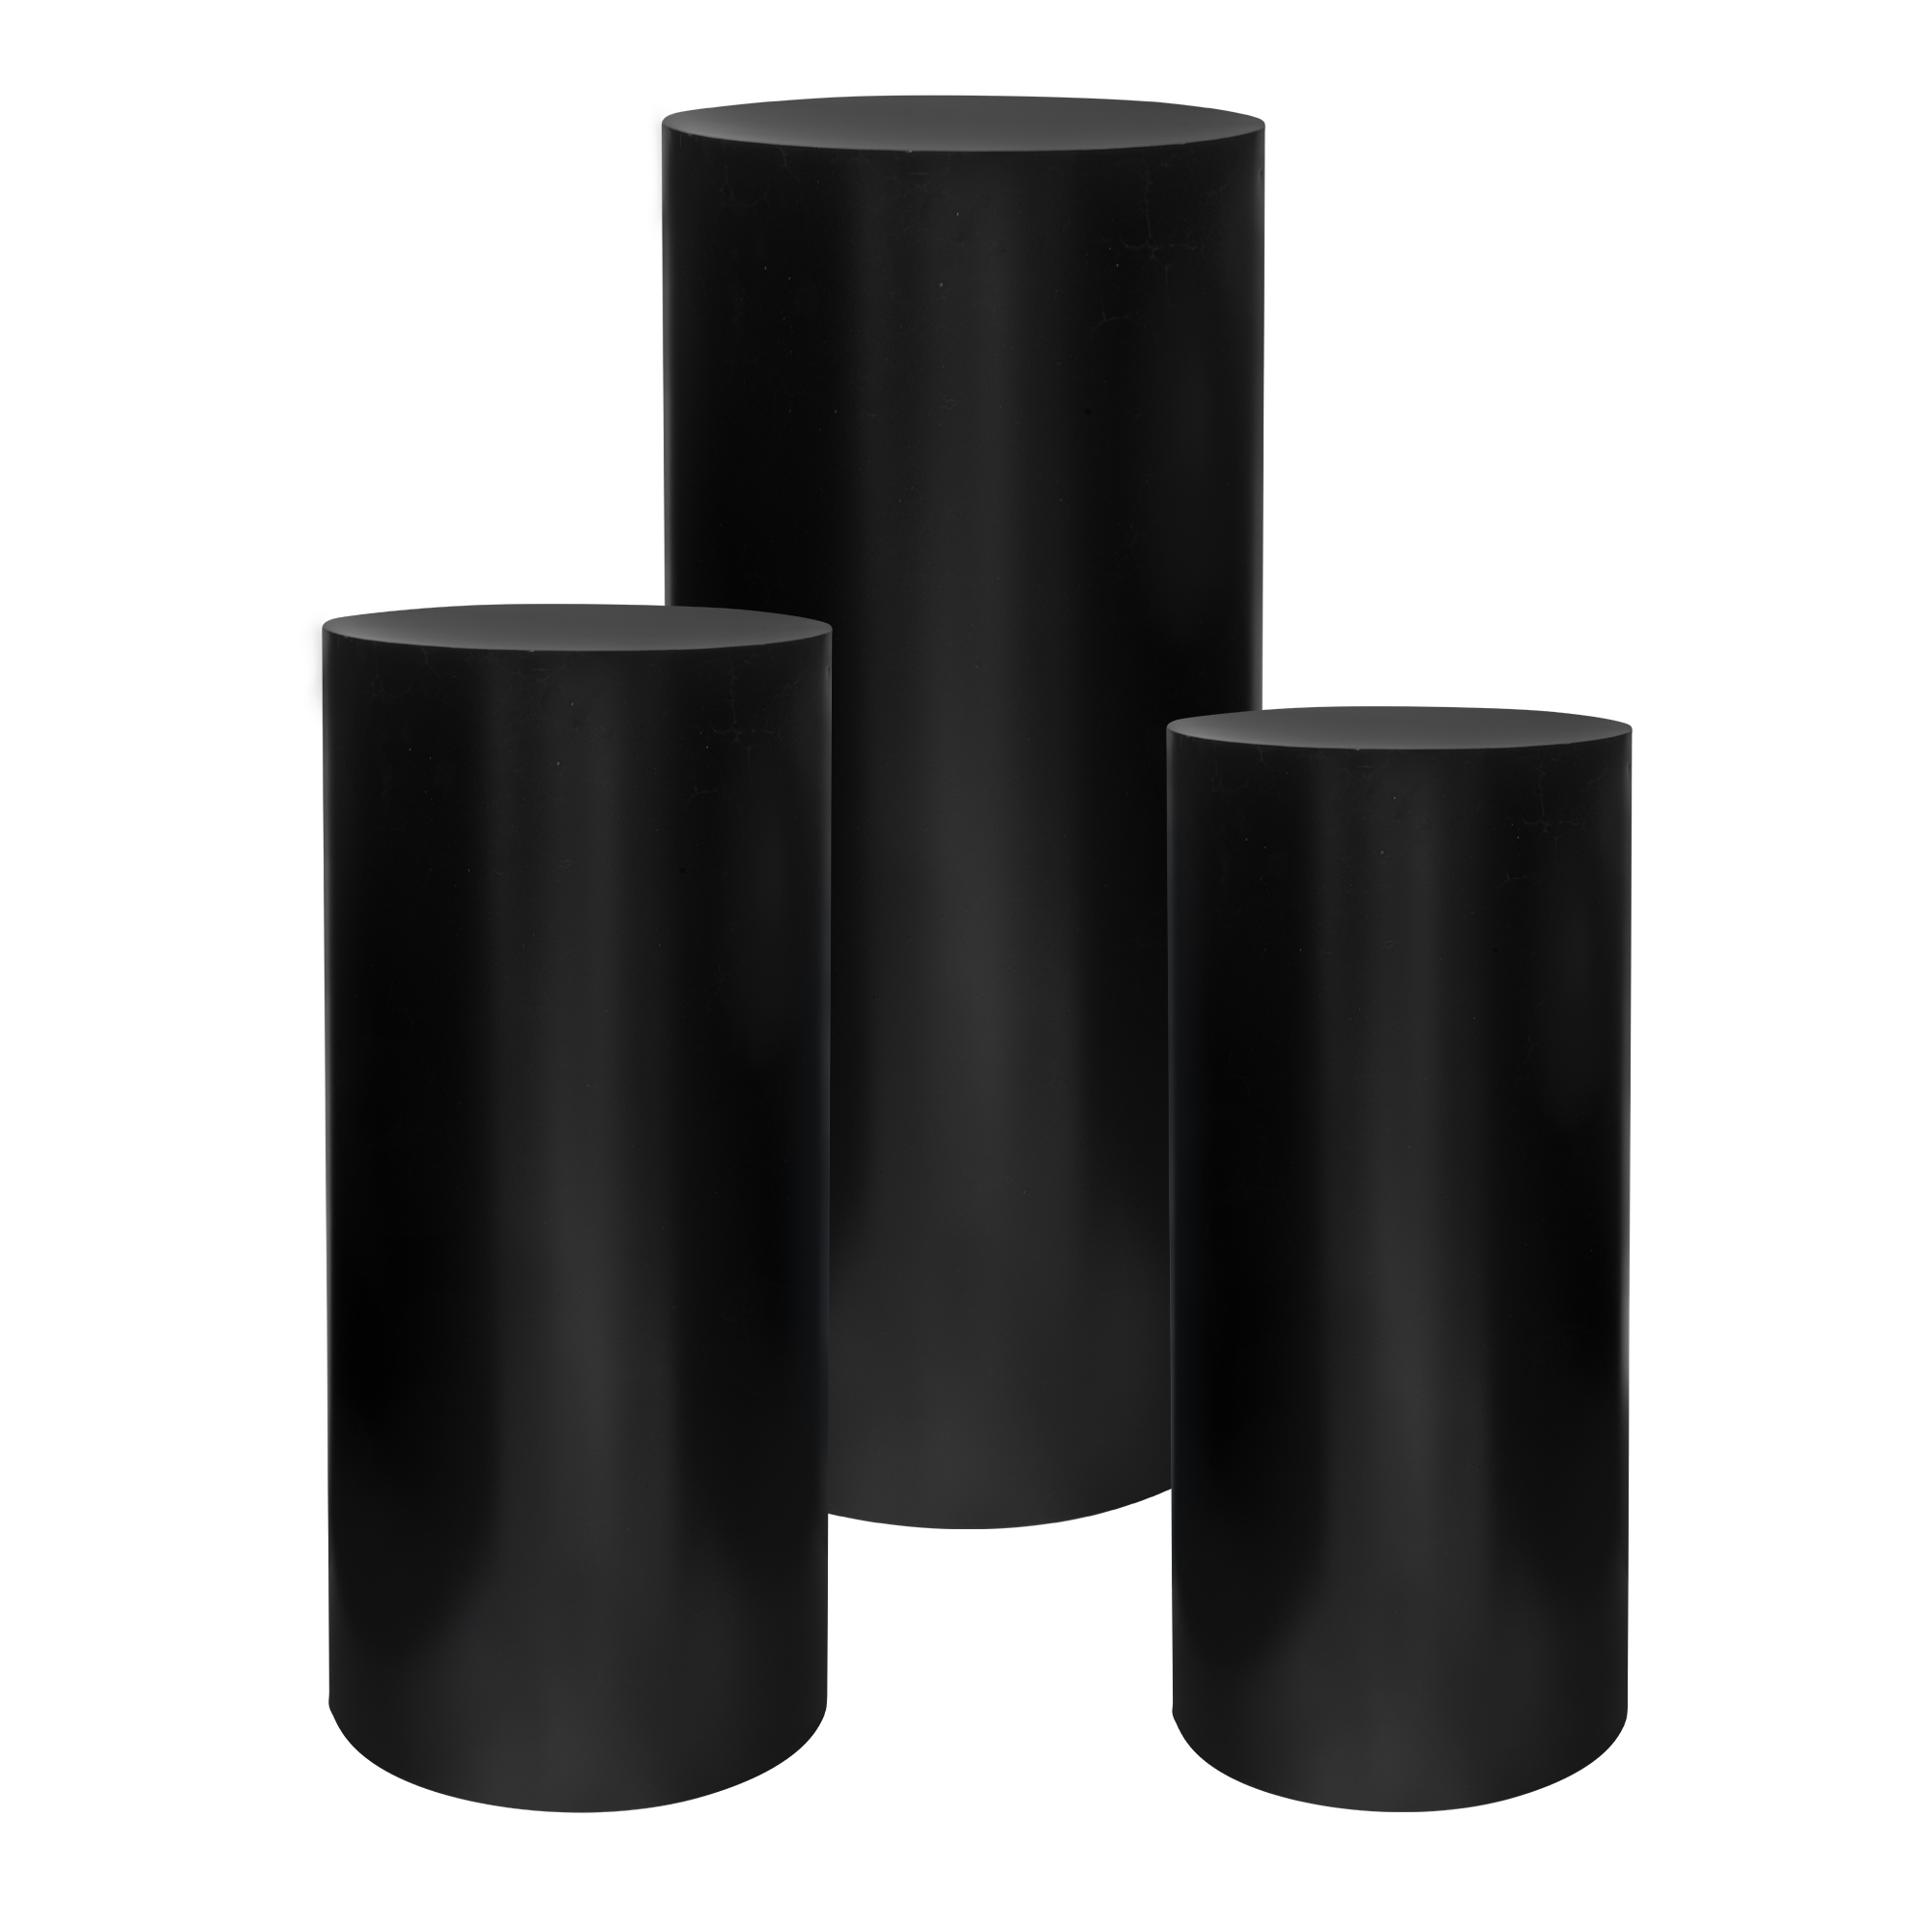 Metal Cylinder Pedestals Display 3pc/set - Black